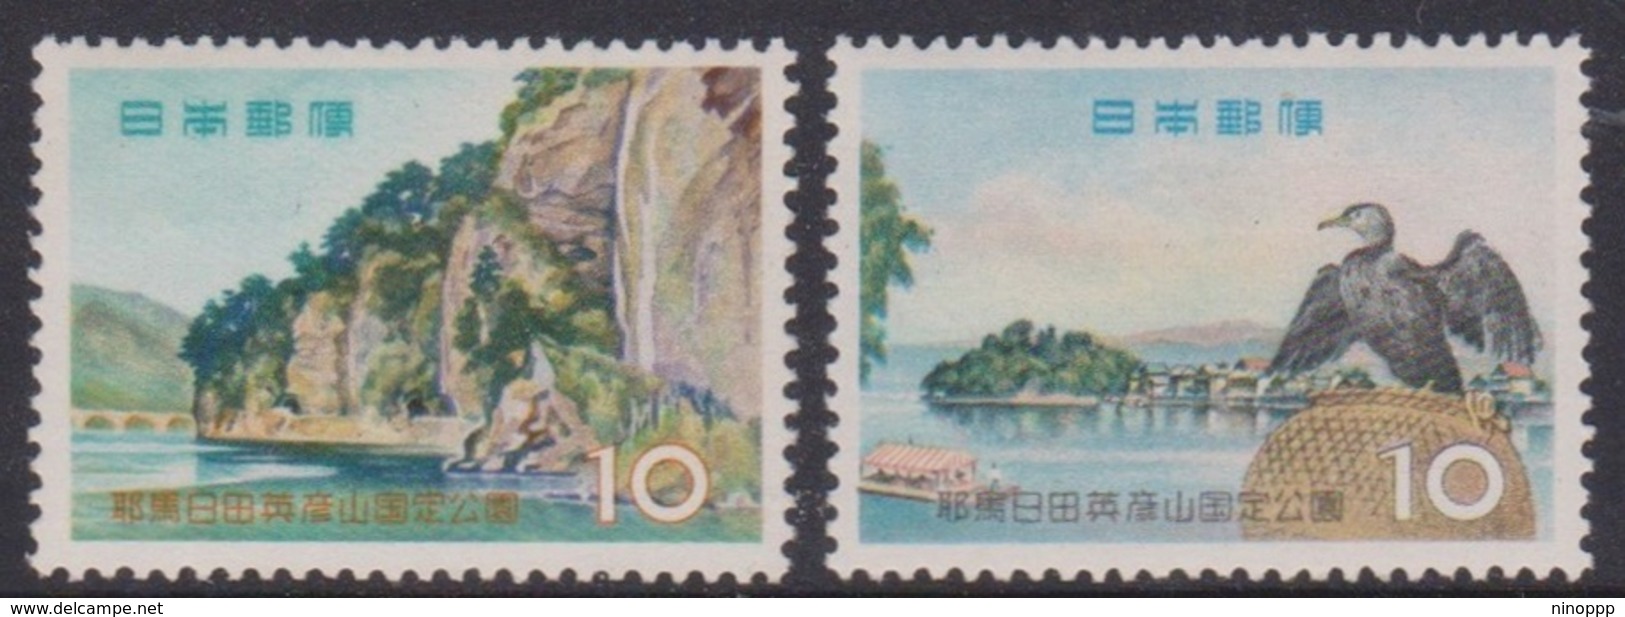 Japan SG807-808 1959 Yaba-Hita-Hikosan Quasi National Park, Mint Never Hinged - Unused Stamps